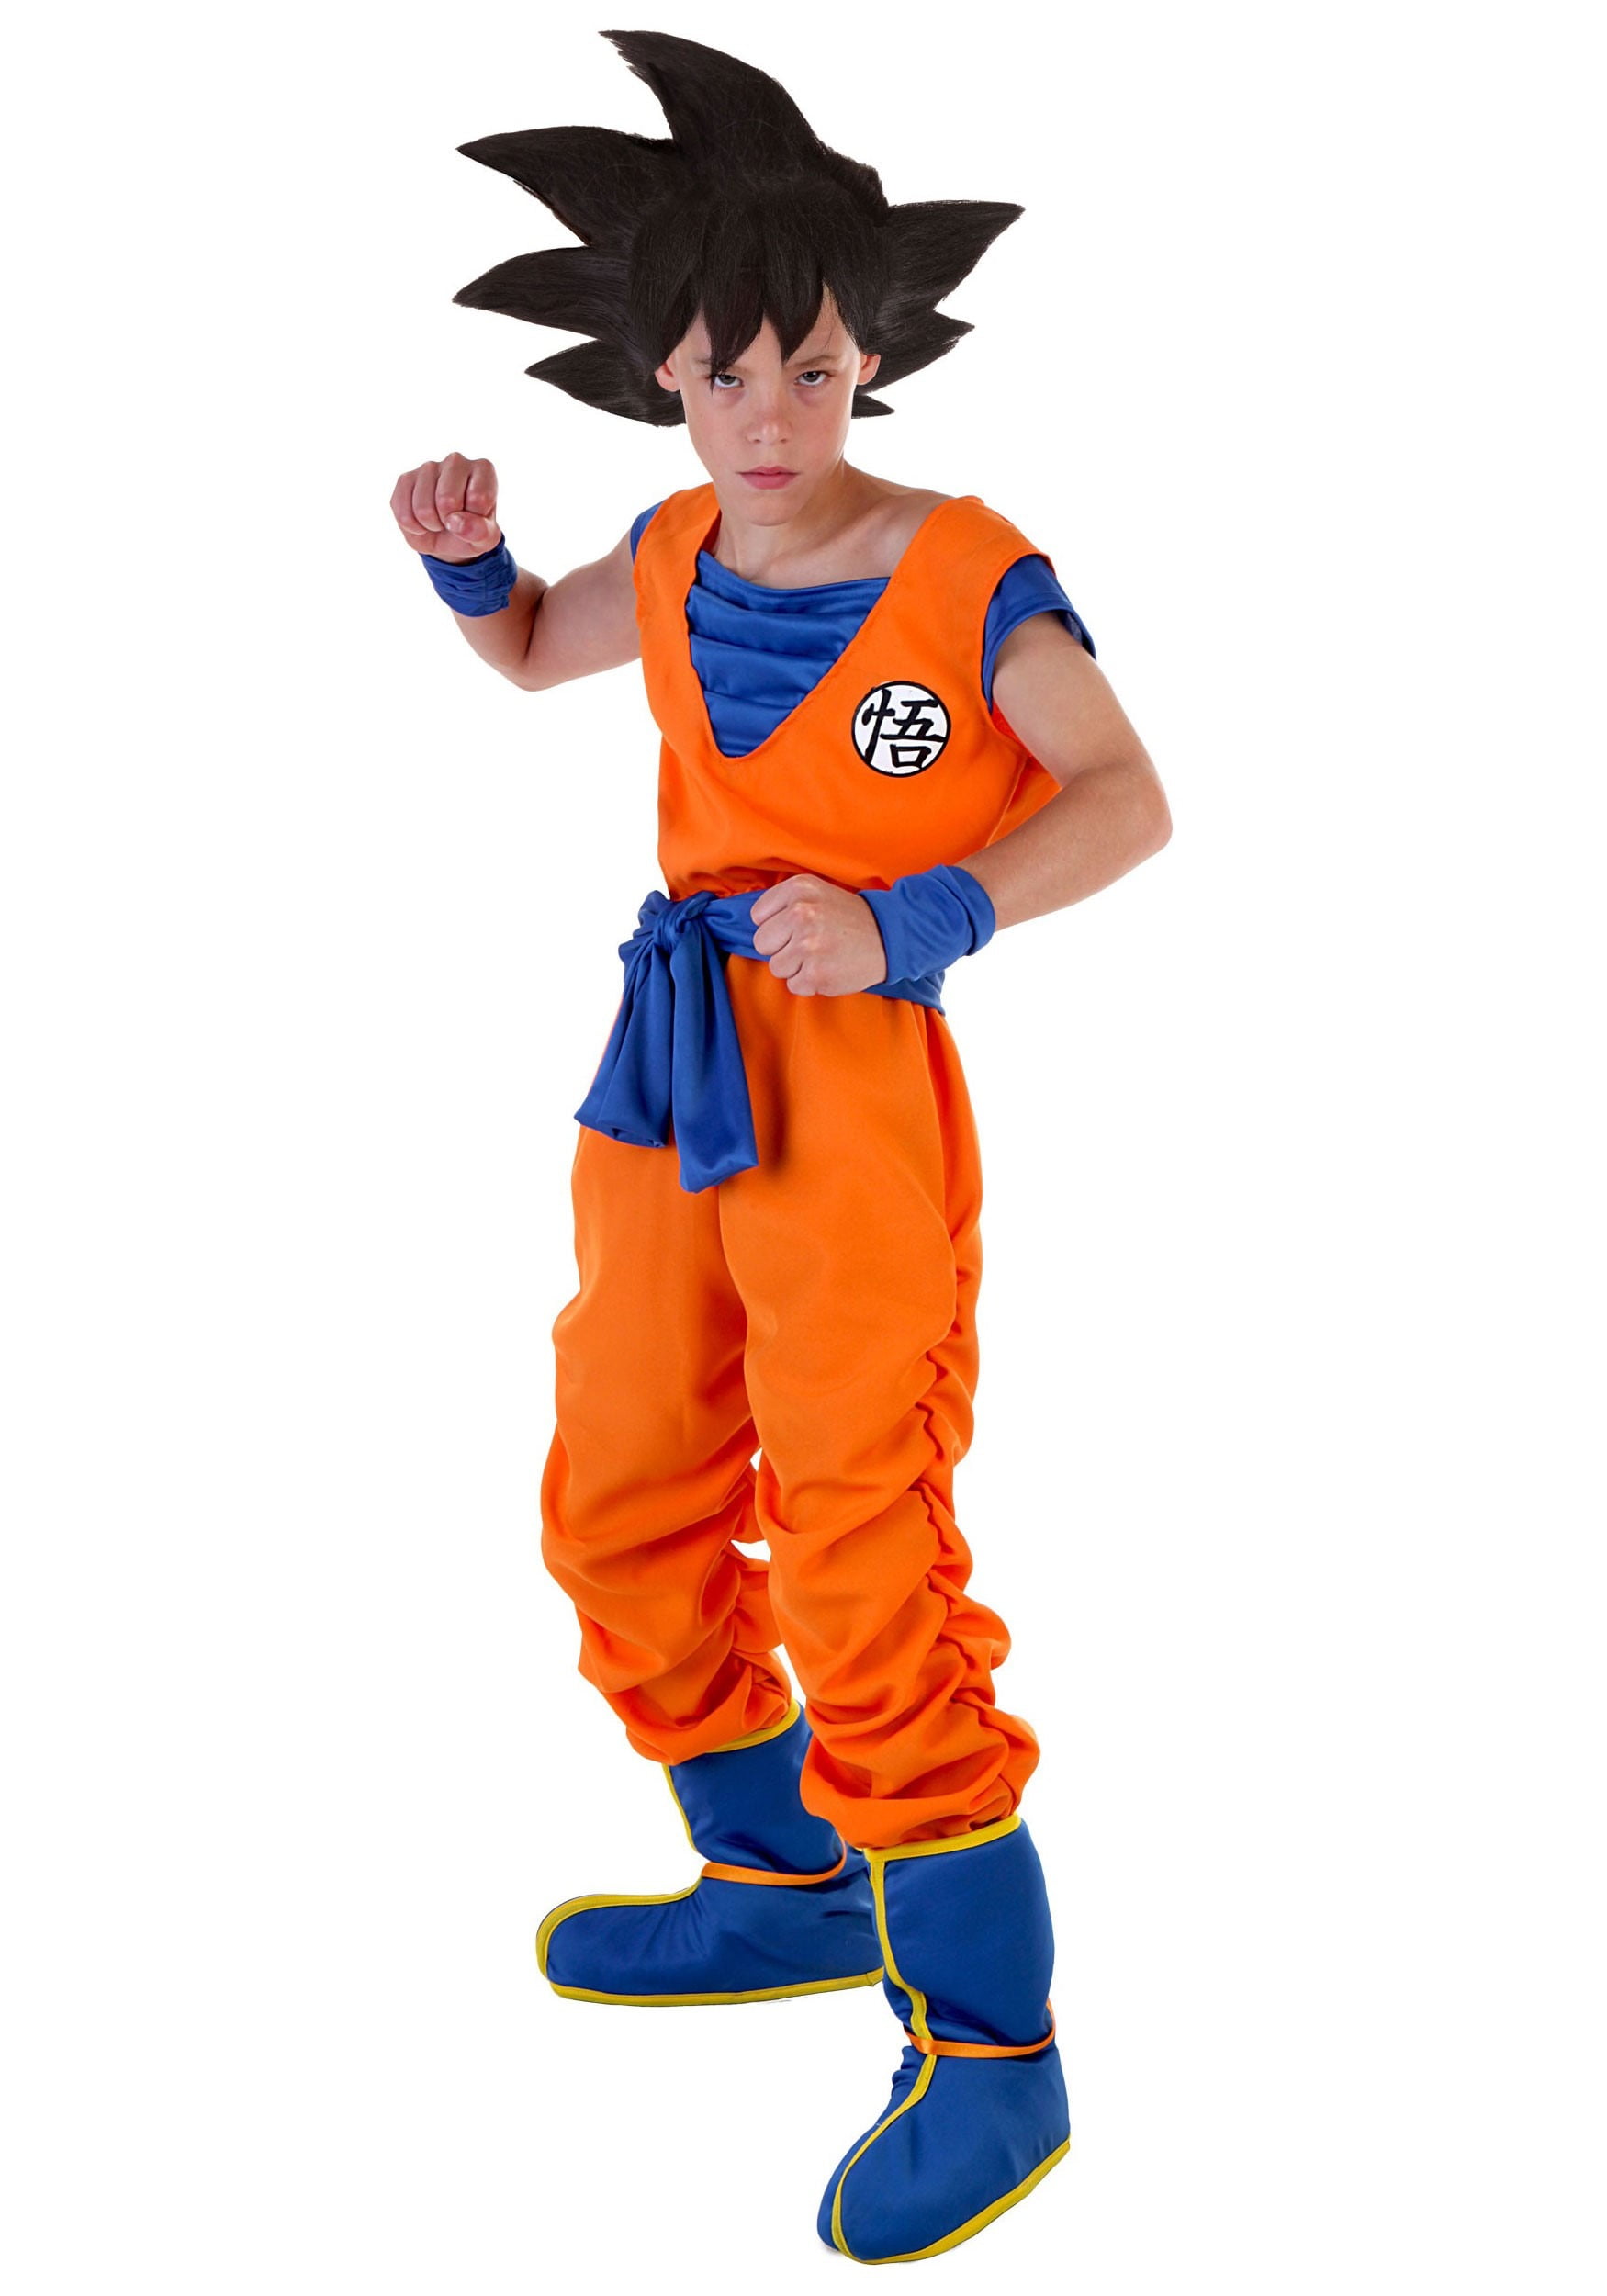 Boys Kids Children Costume Set Halloween Party Dress Up Outfit Fancy Goku